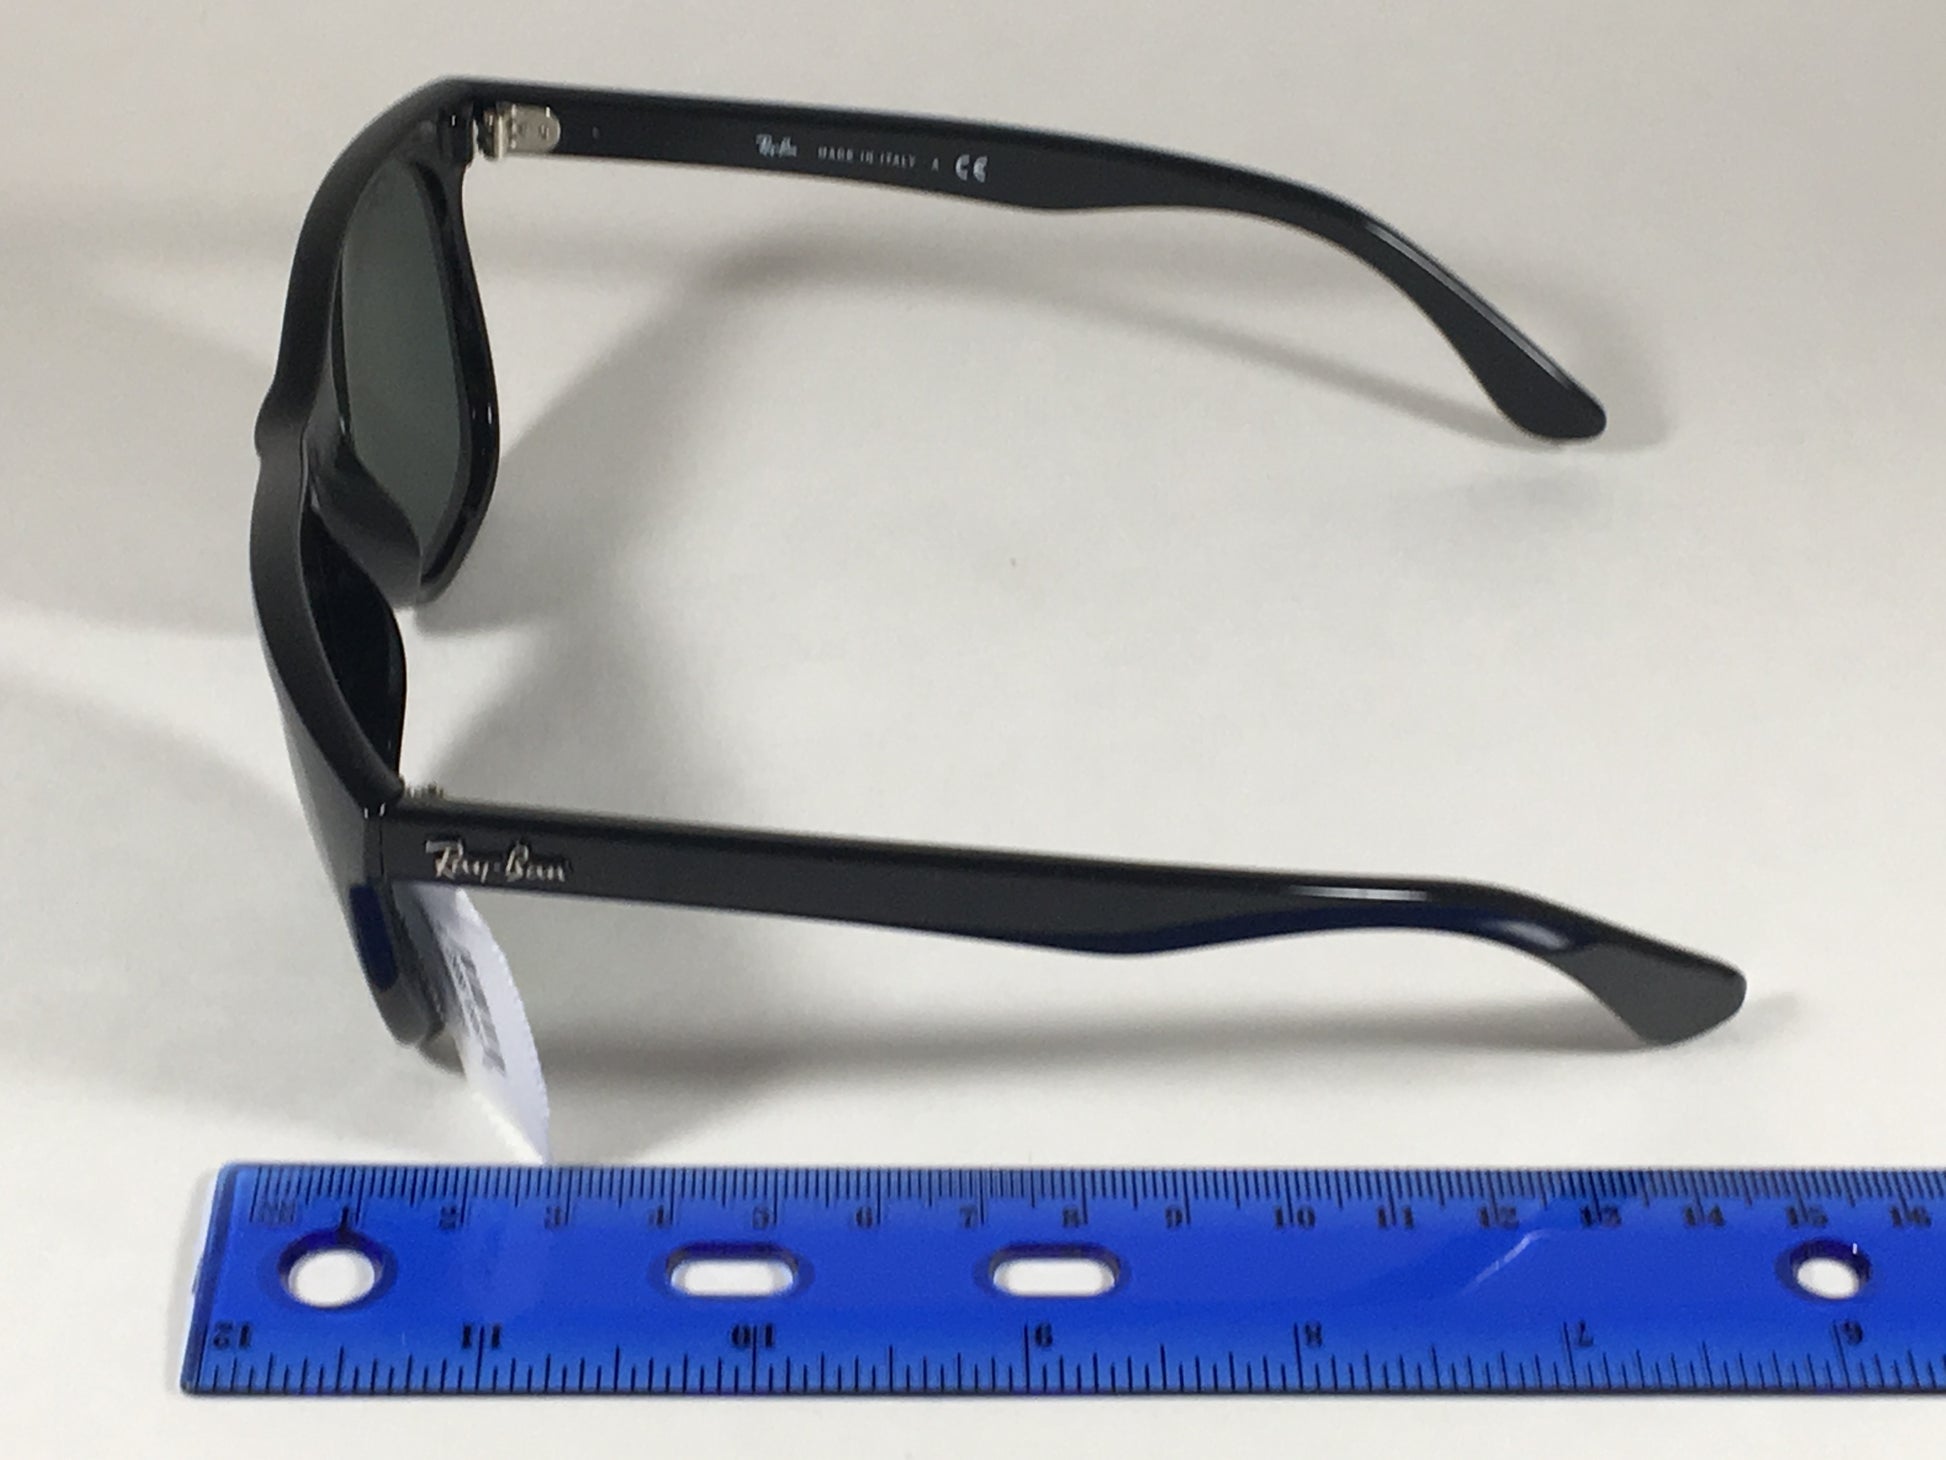 Ray-Ban RB4184 Black Polarized Sunglasses